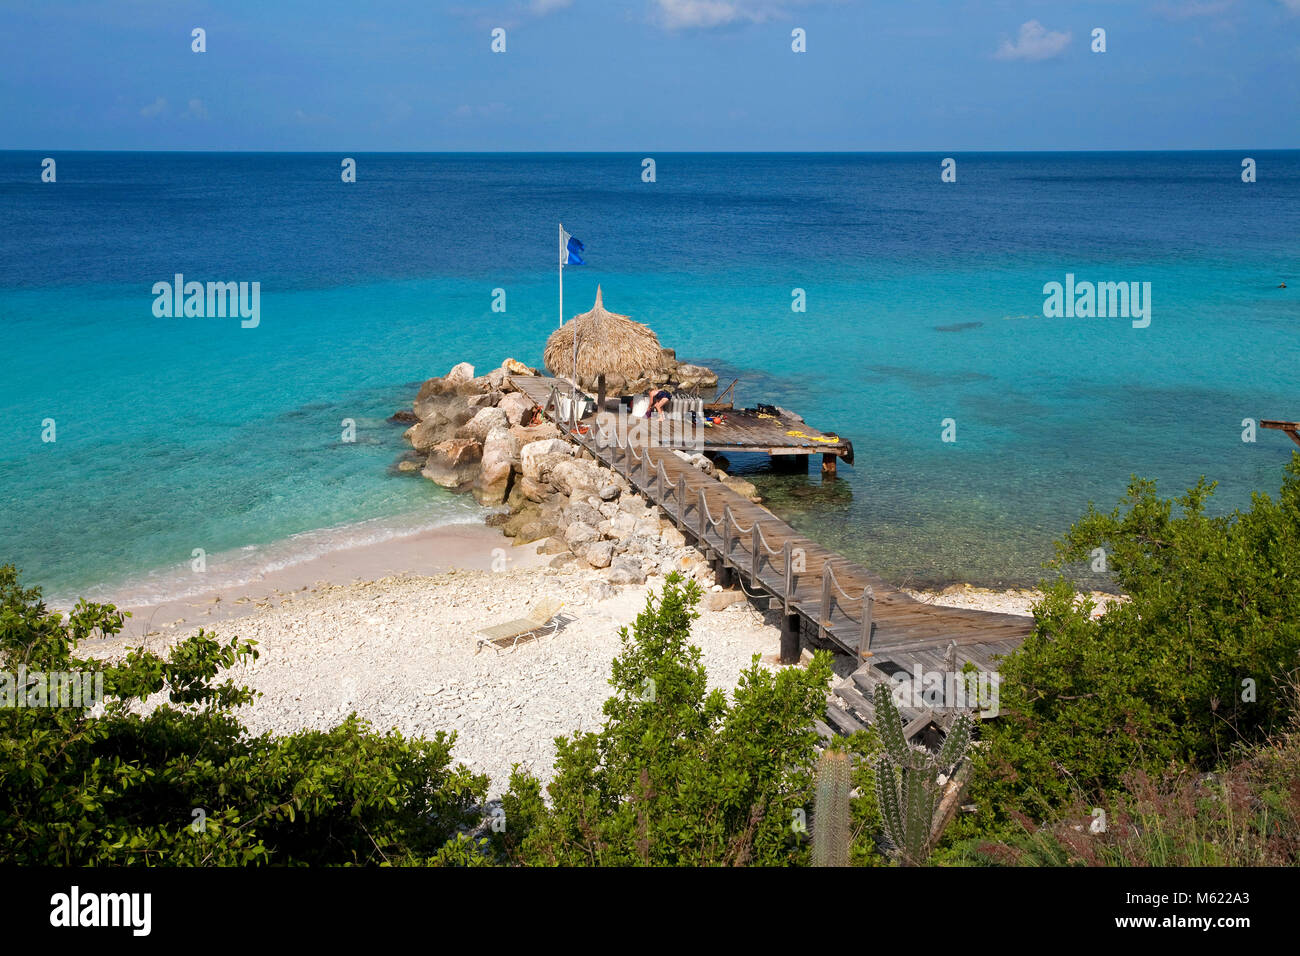 Imbarcadero di Habitat Resort Curacao, Curacao, Antille olandesi, dei Caraibi Foto Stock